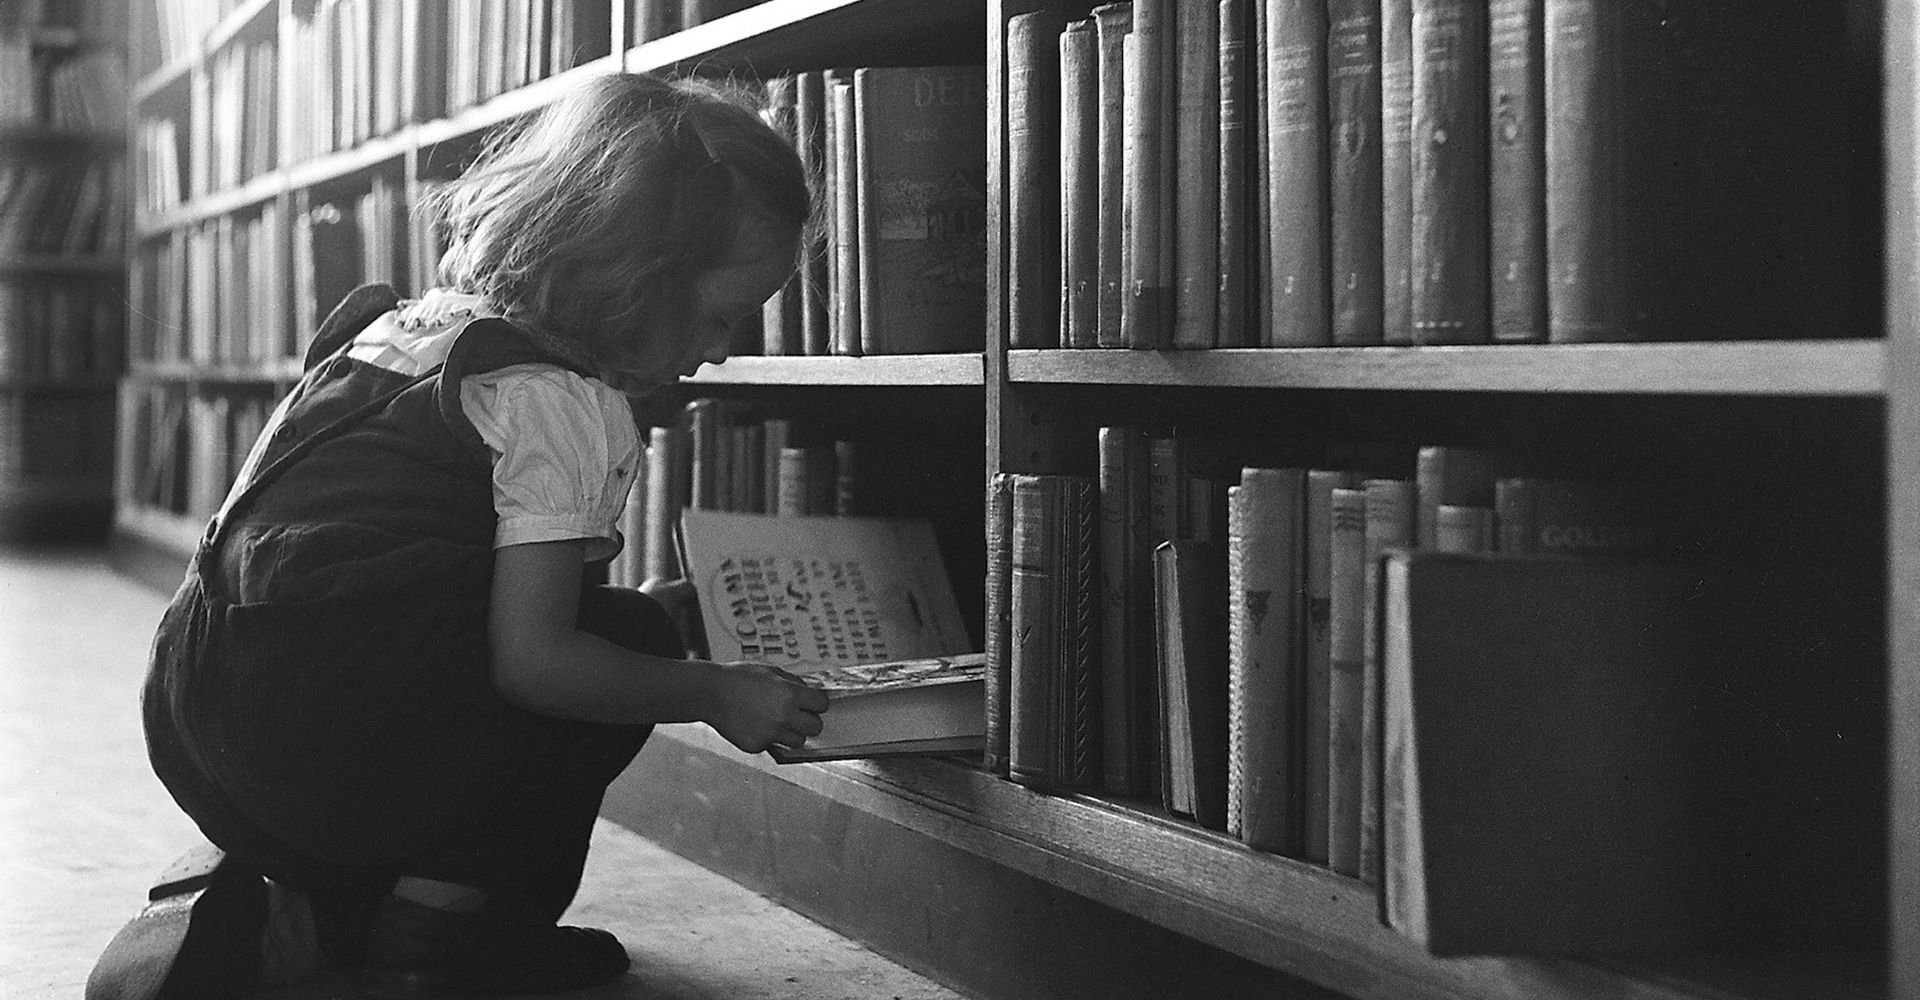 Una bambina seduto per terra in una libreria tiene fra le mani un libro